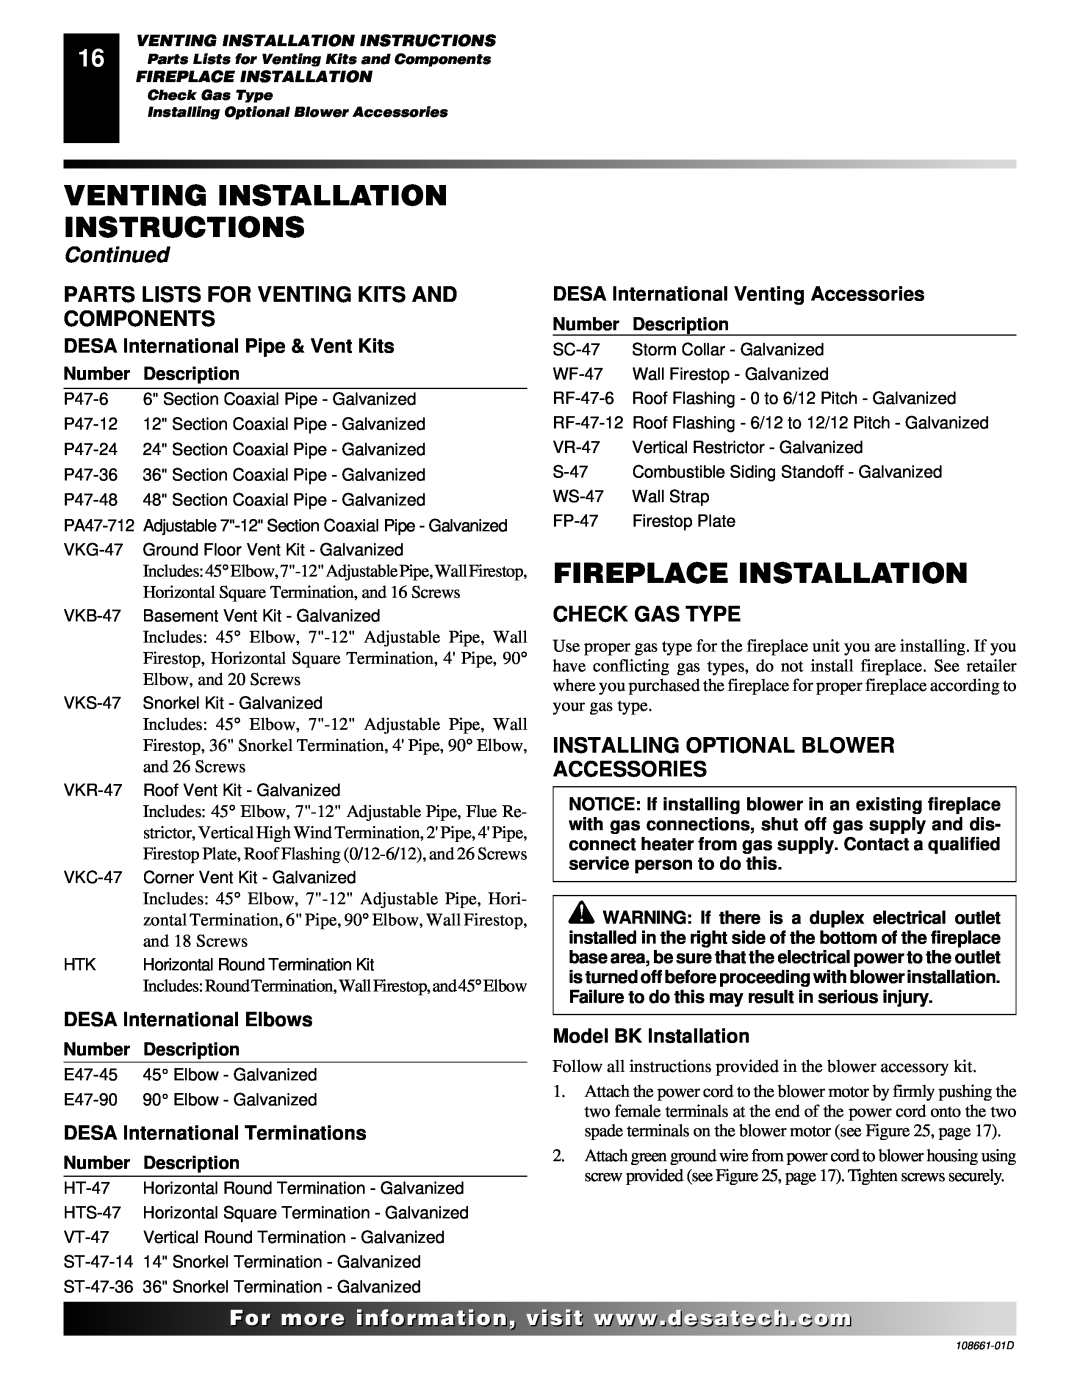 Desa (V)T36N SERIES Fireplace Installation, Venting Installation Instructions, Continued, DESA International Elbows 